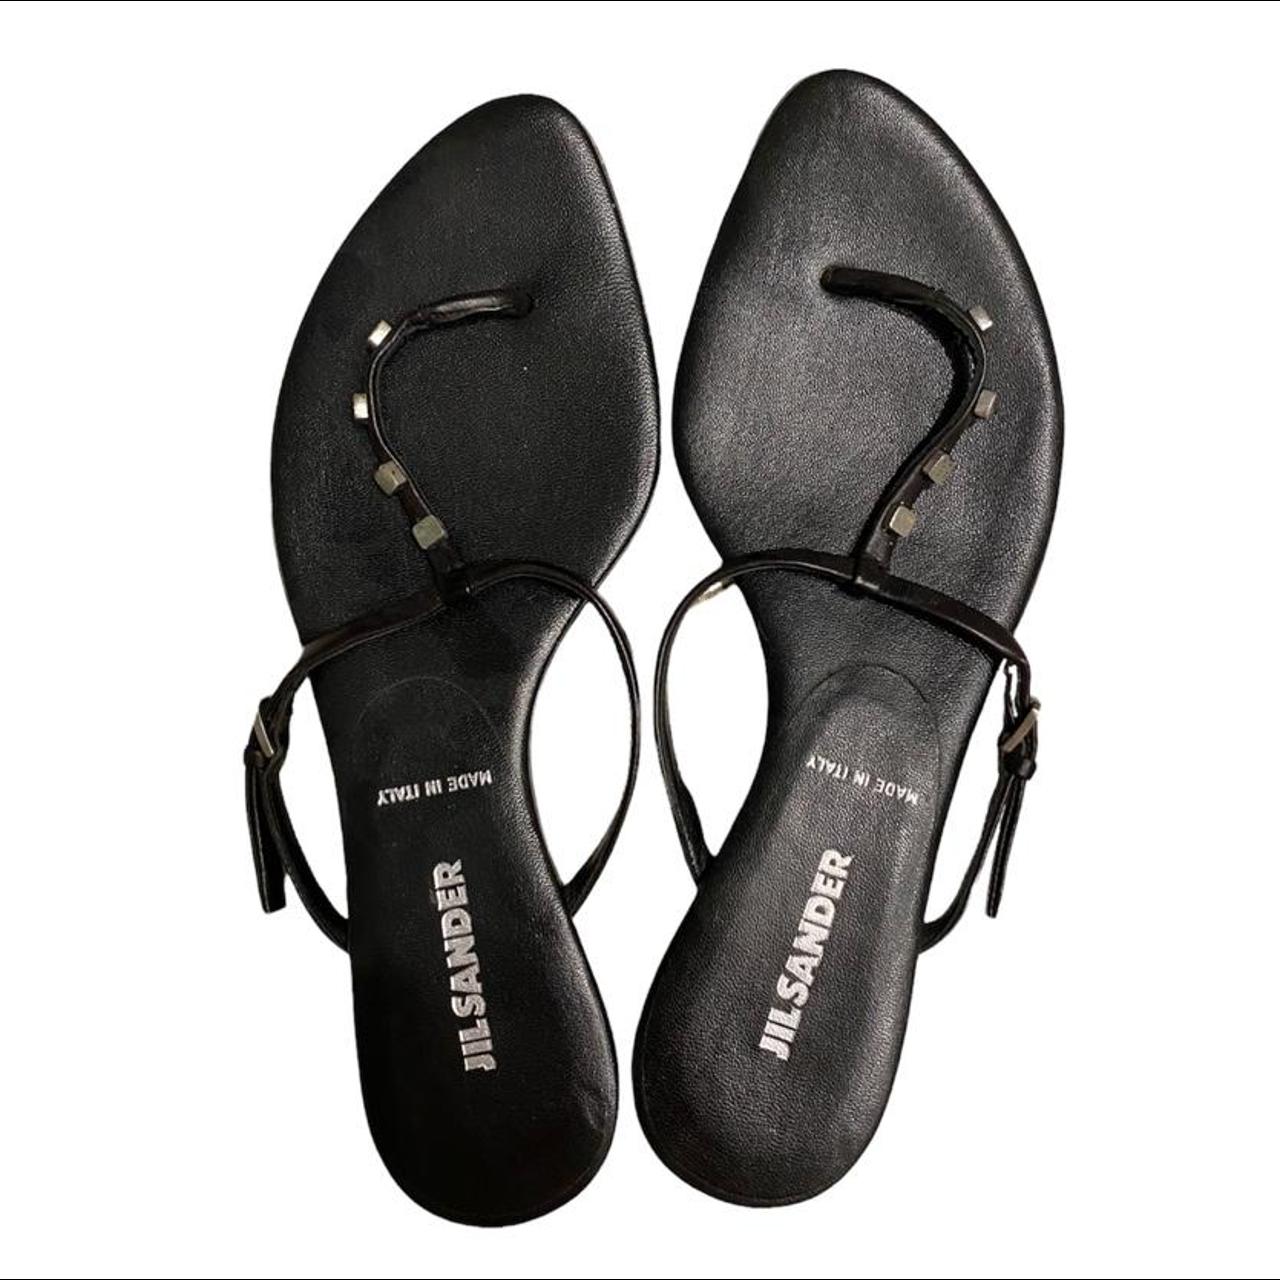 Product Image 1 - Beautiful Jil sander sandals! Size